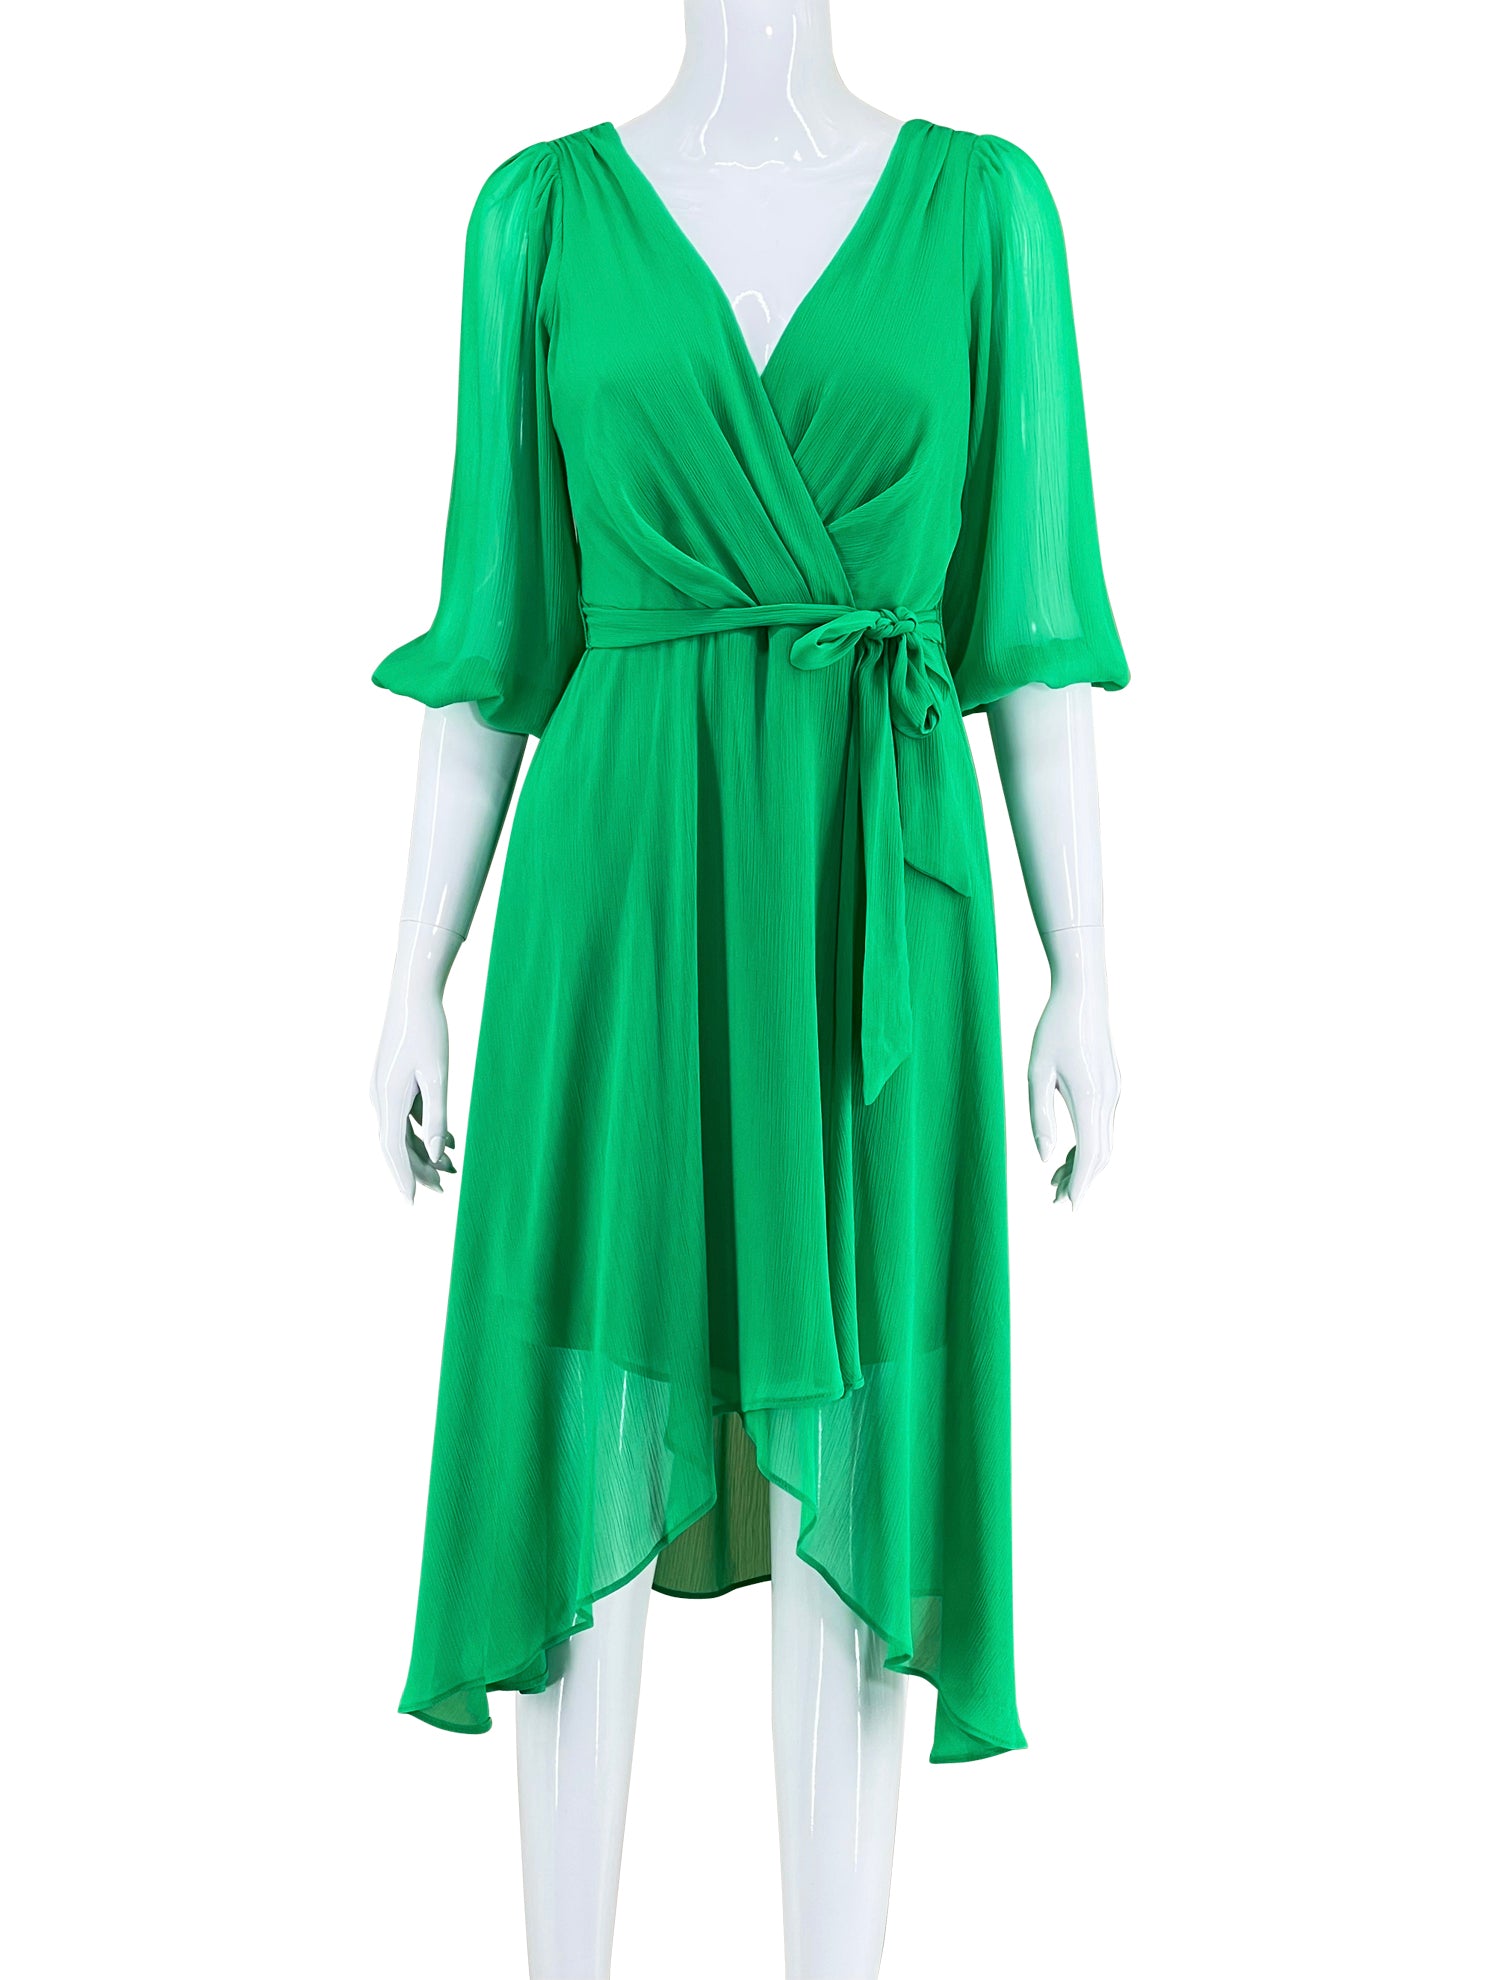 DKNY Emerald Wrap Dress